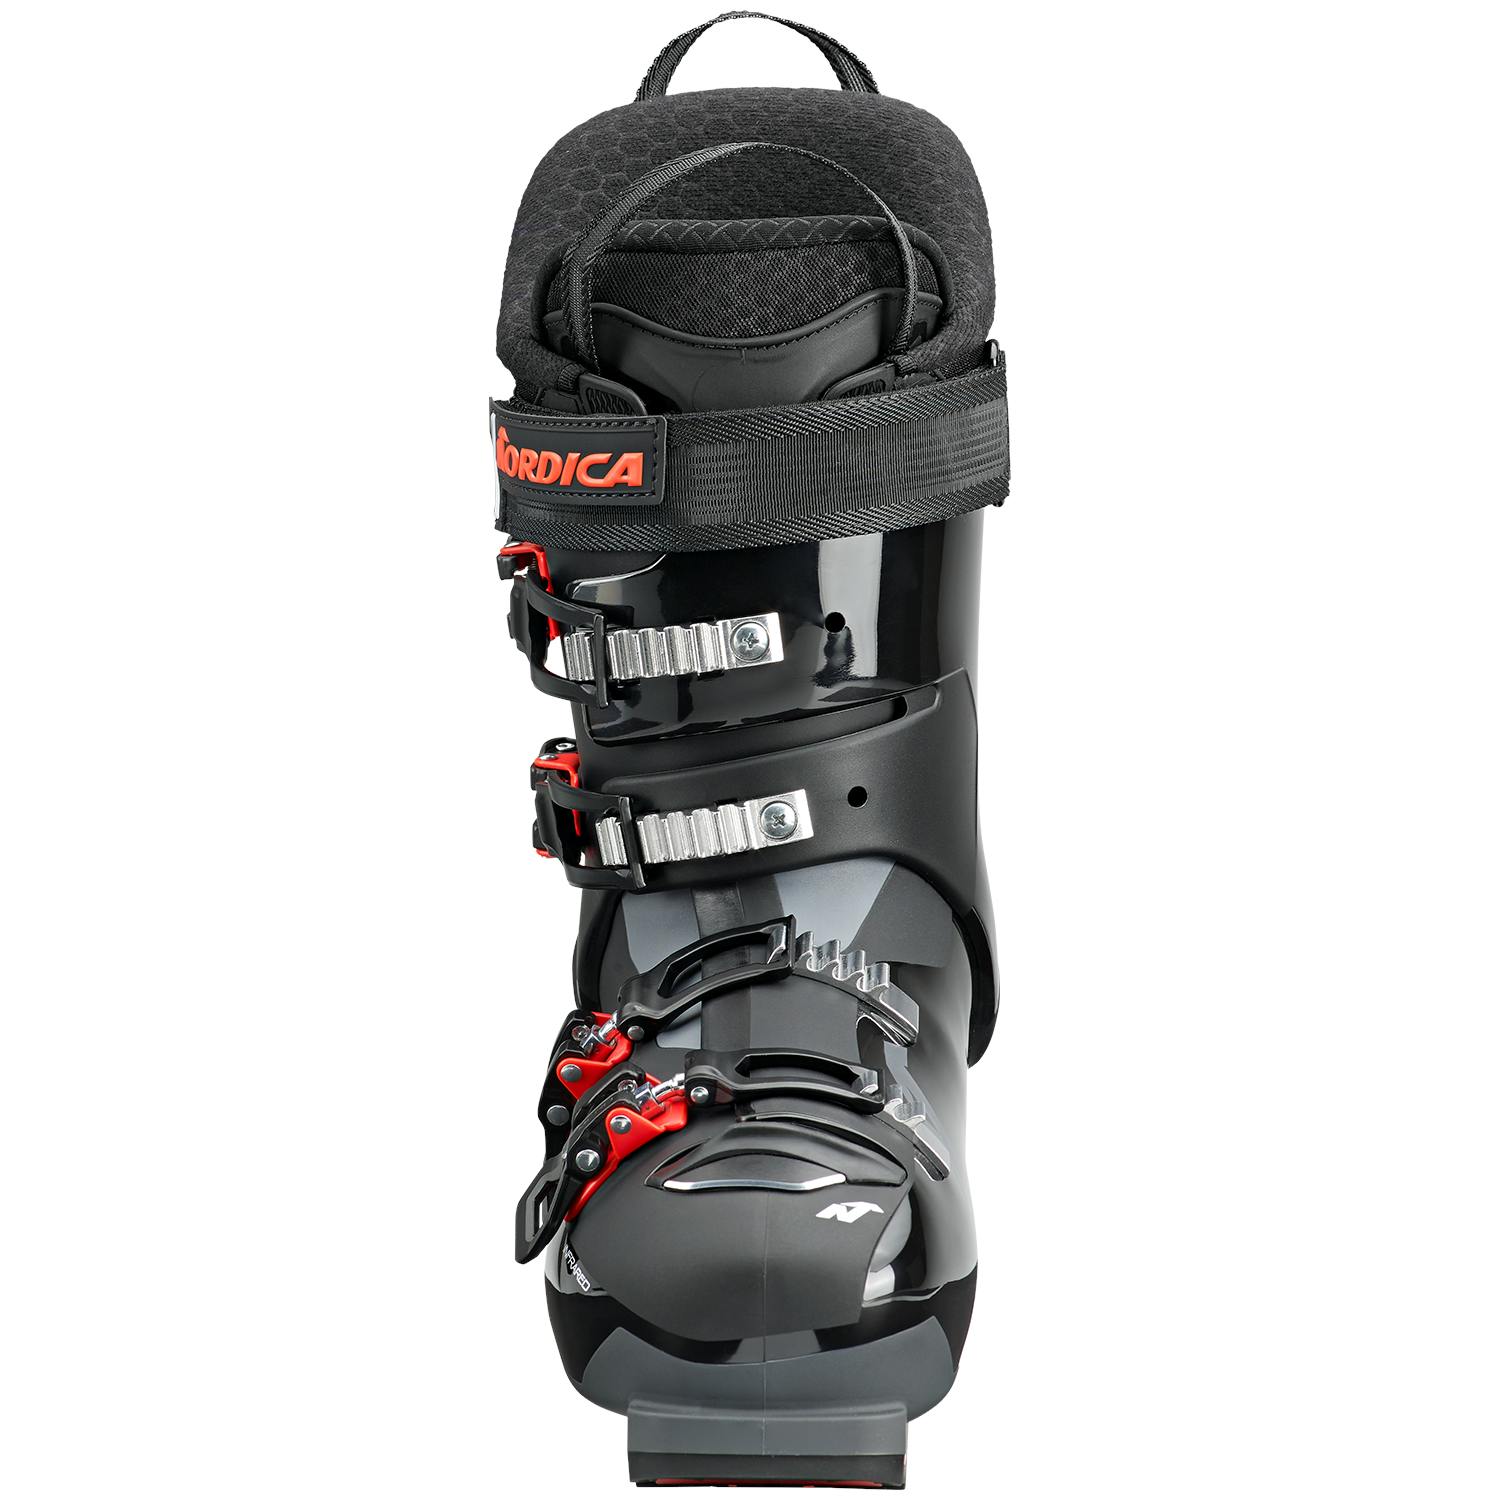 Nordica Sportmachine 3 100 Ski Boots · 2023